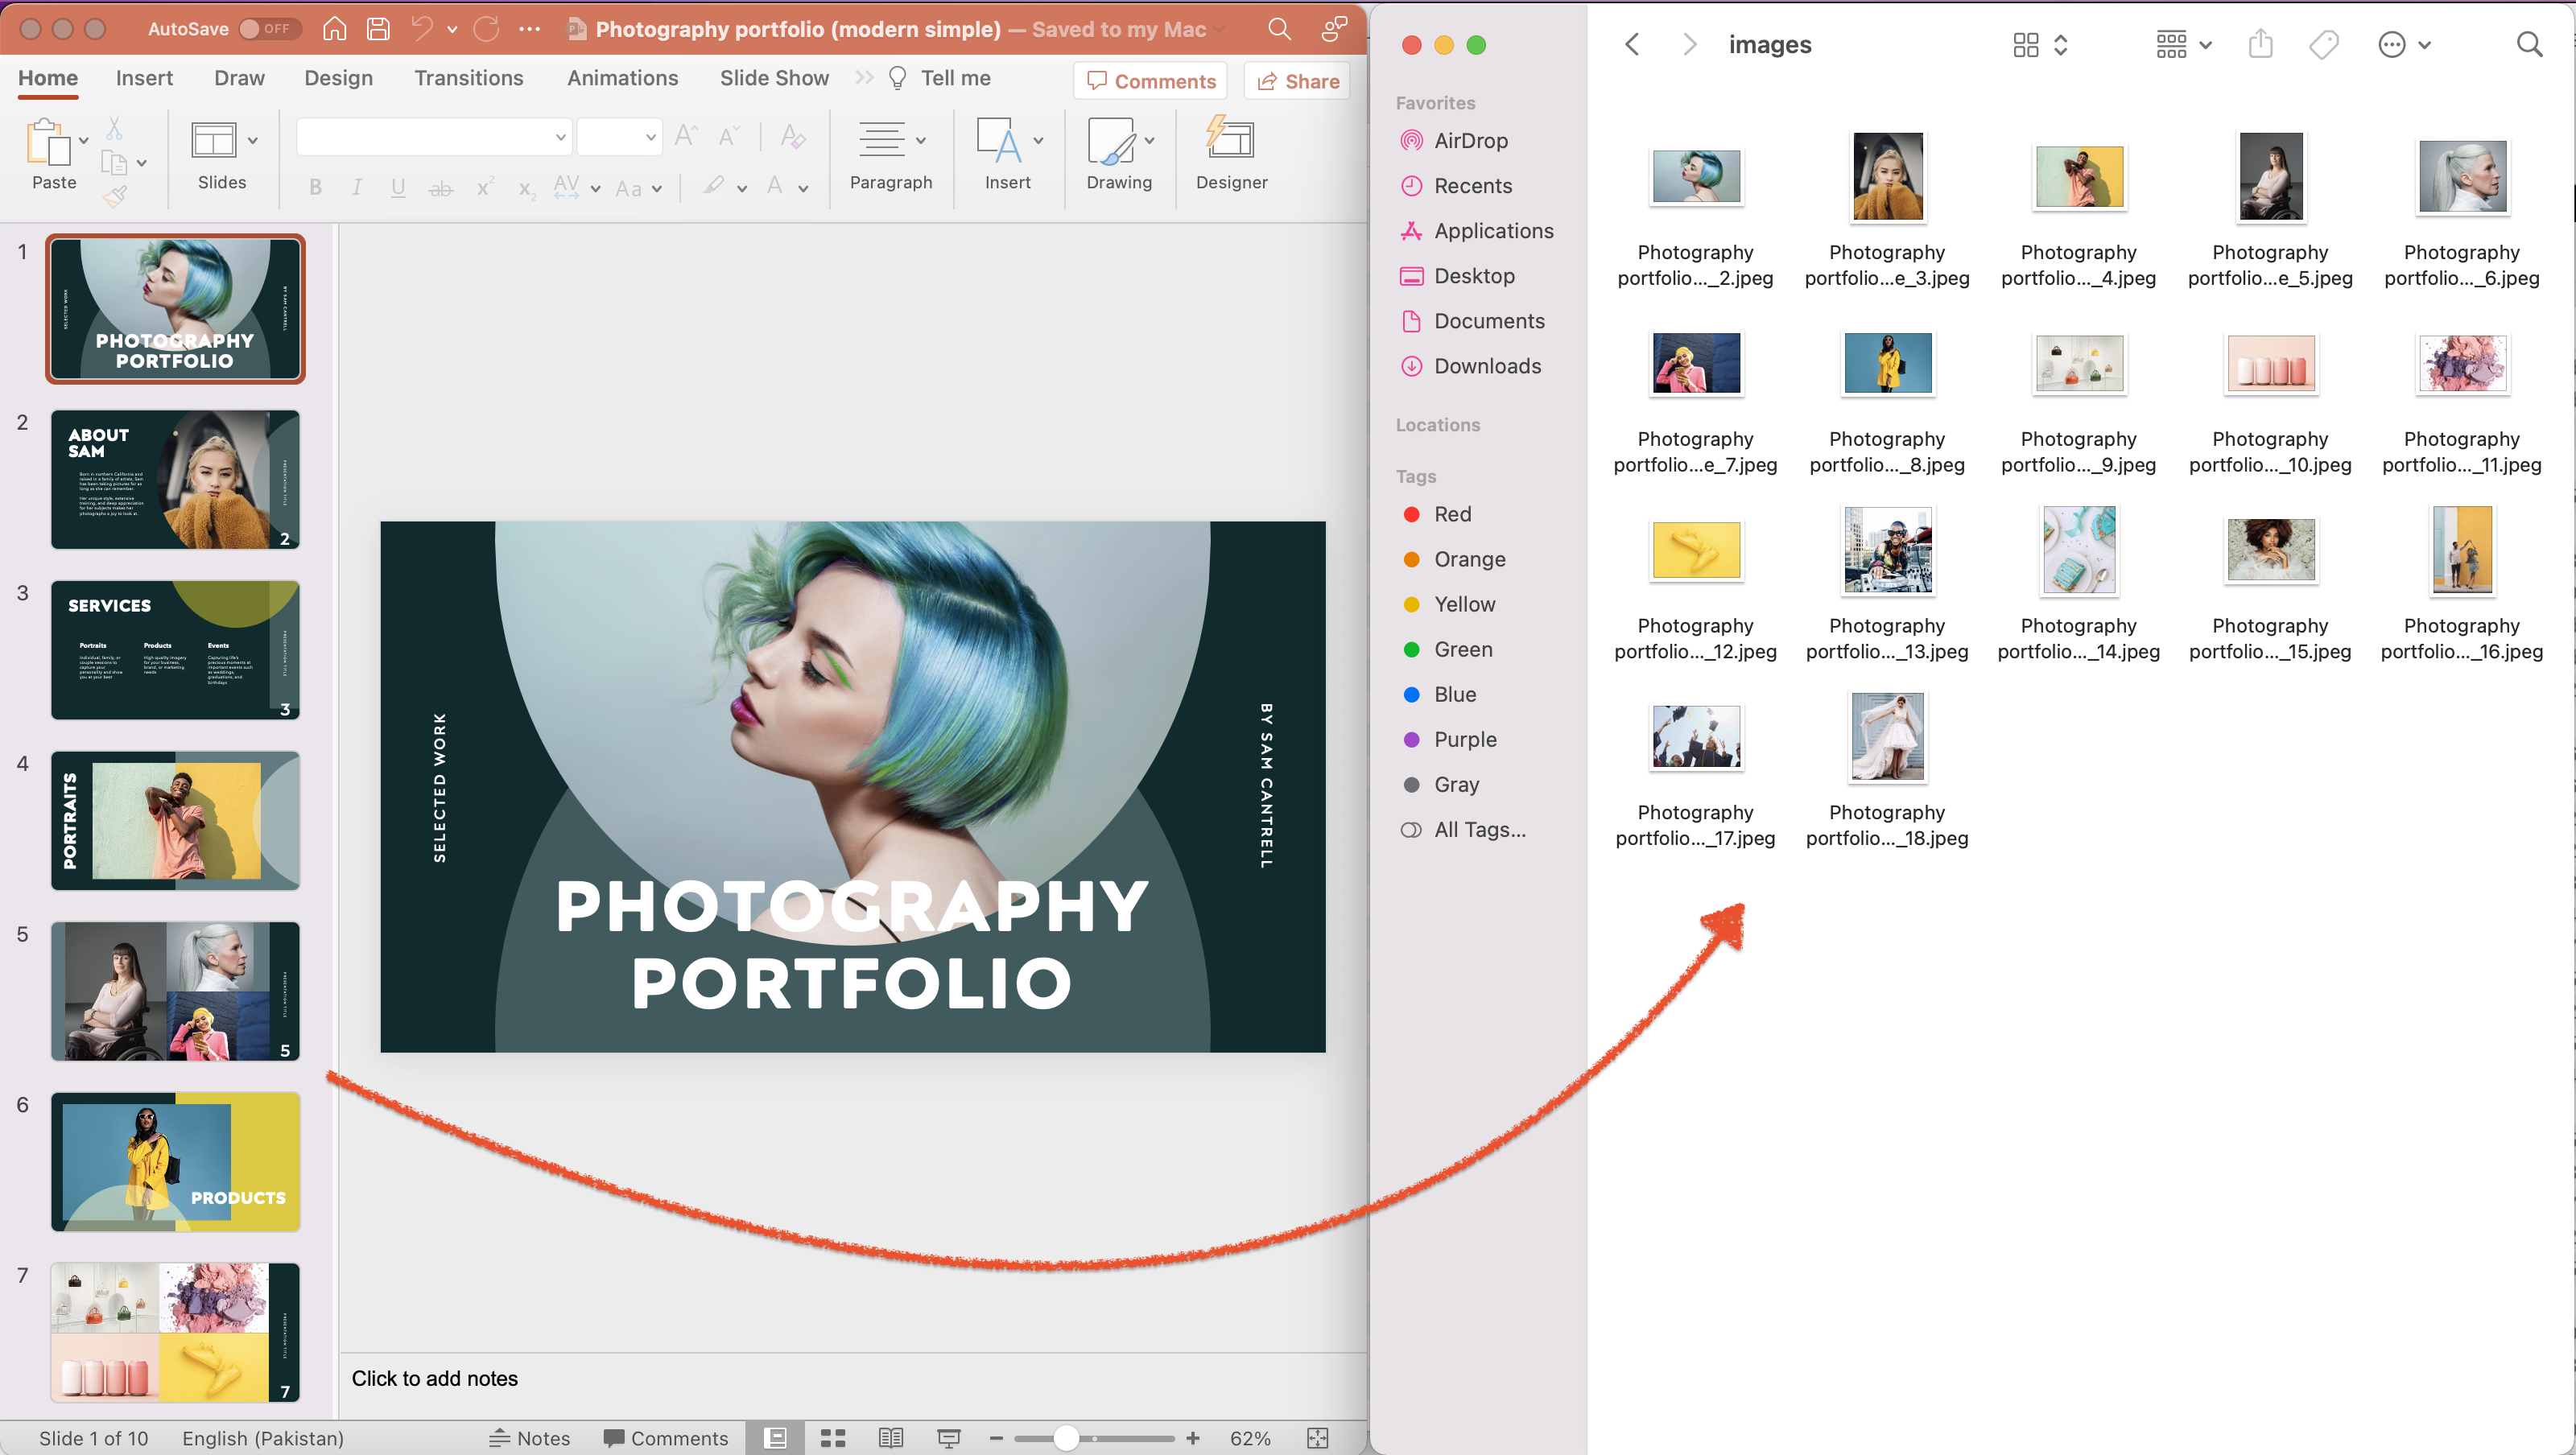 Extrahujte obrázky programu PowerPoint